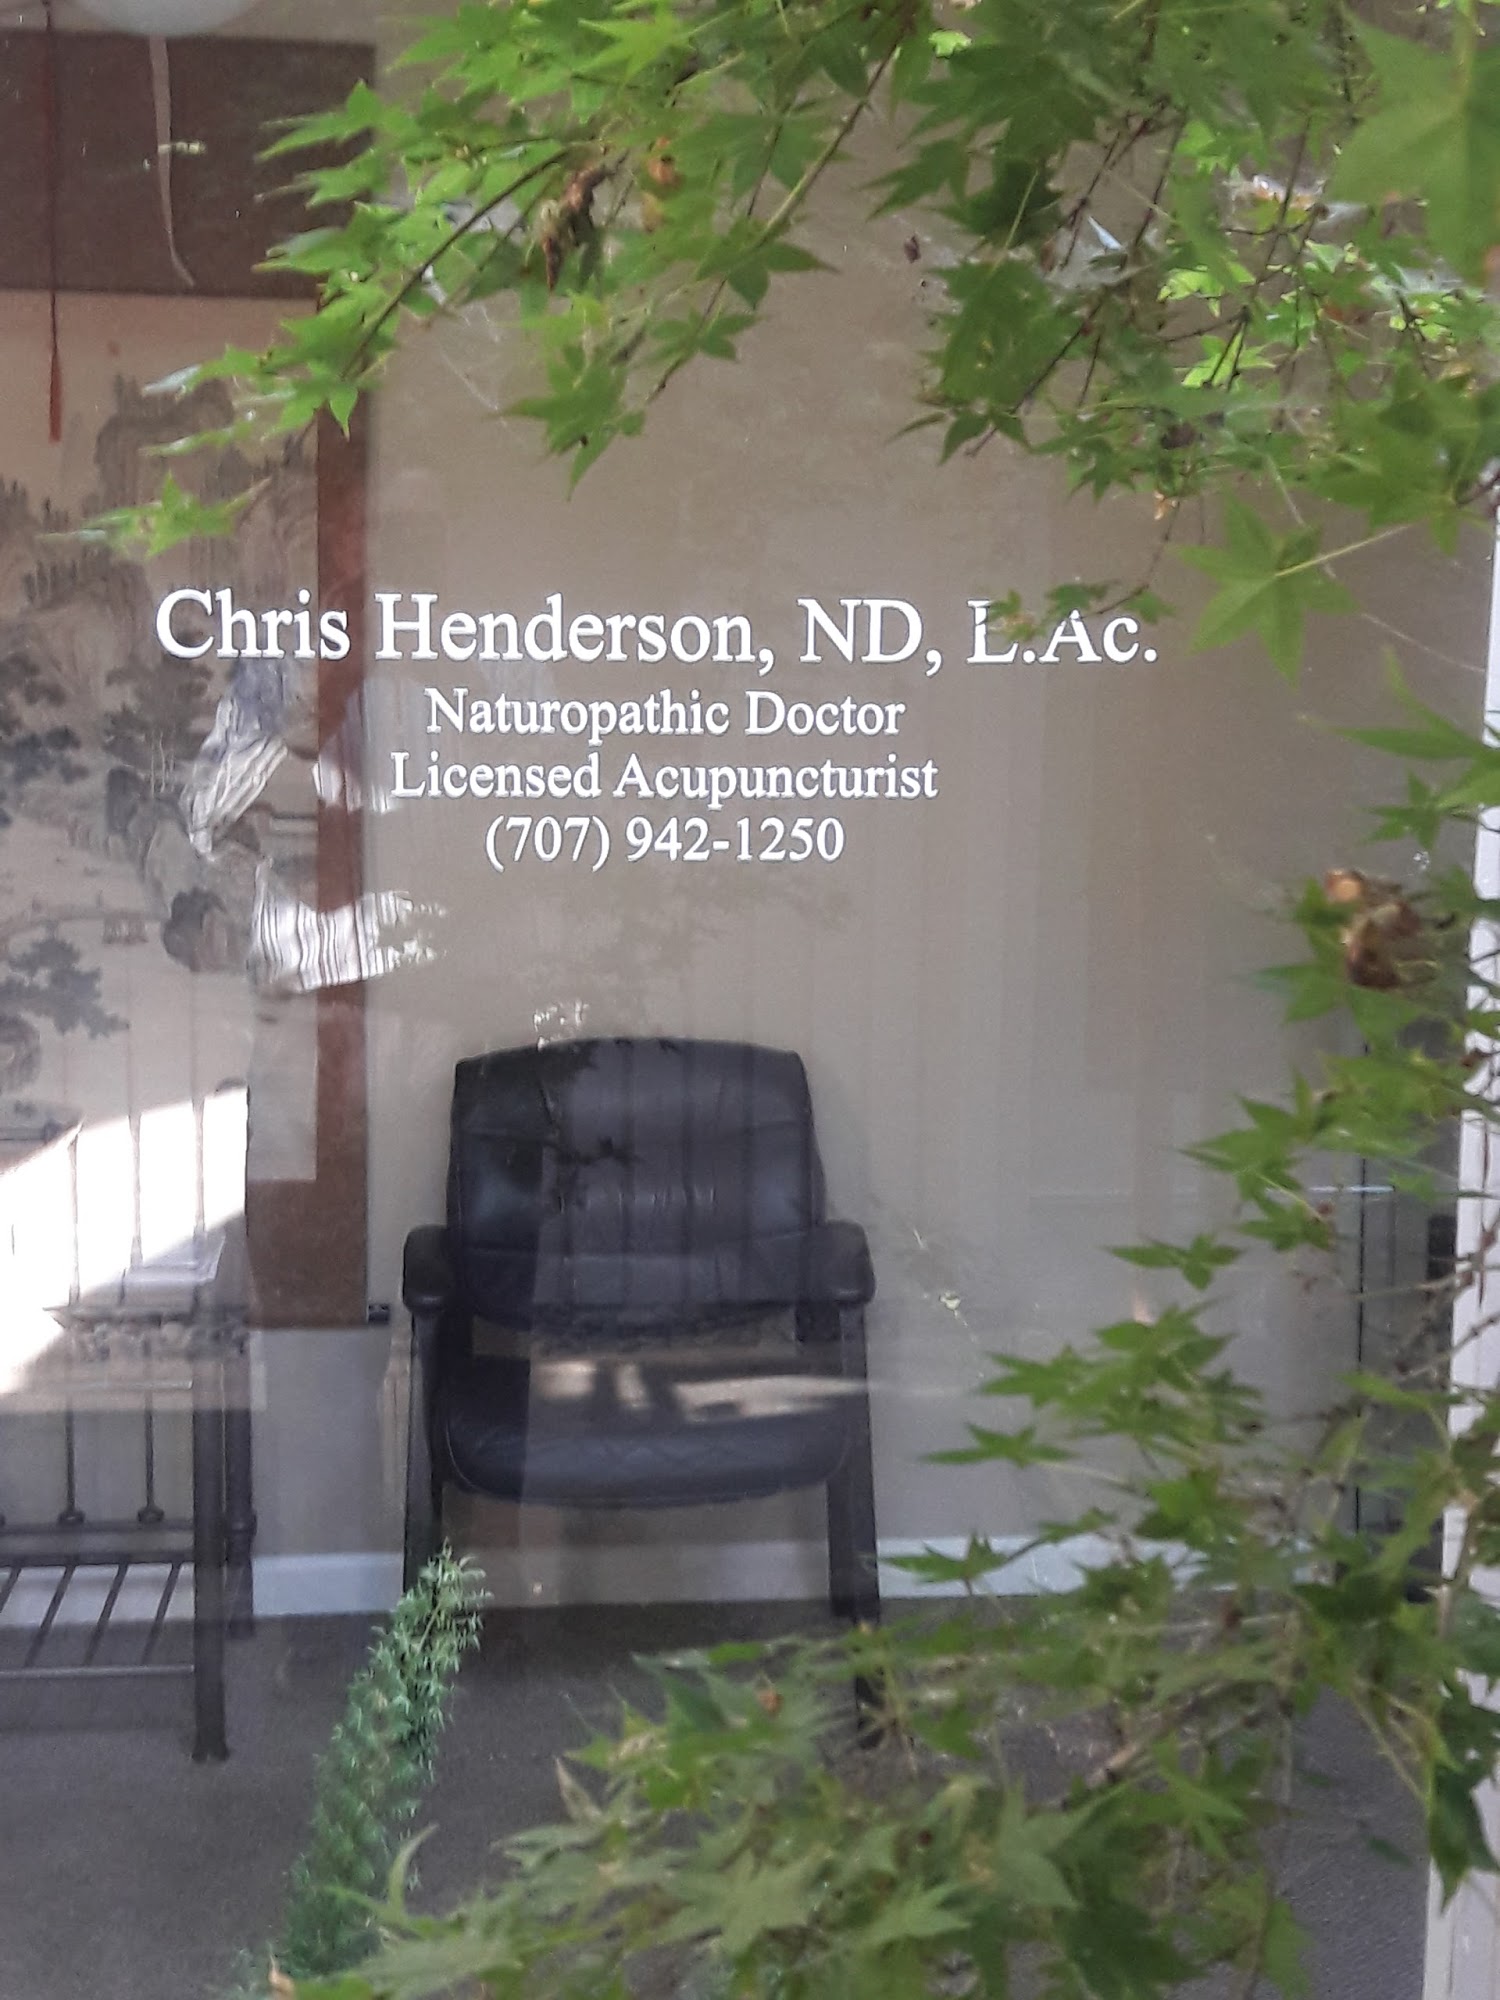 Chris Henderson, ND, L.Ac.